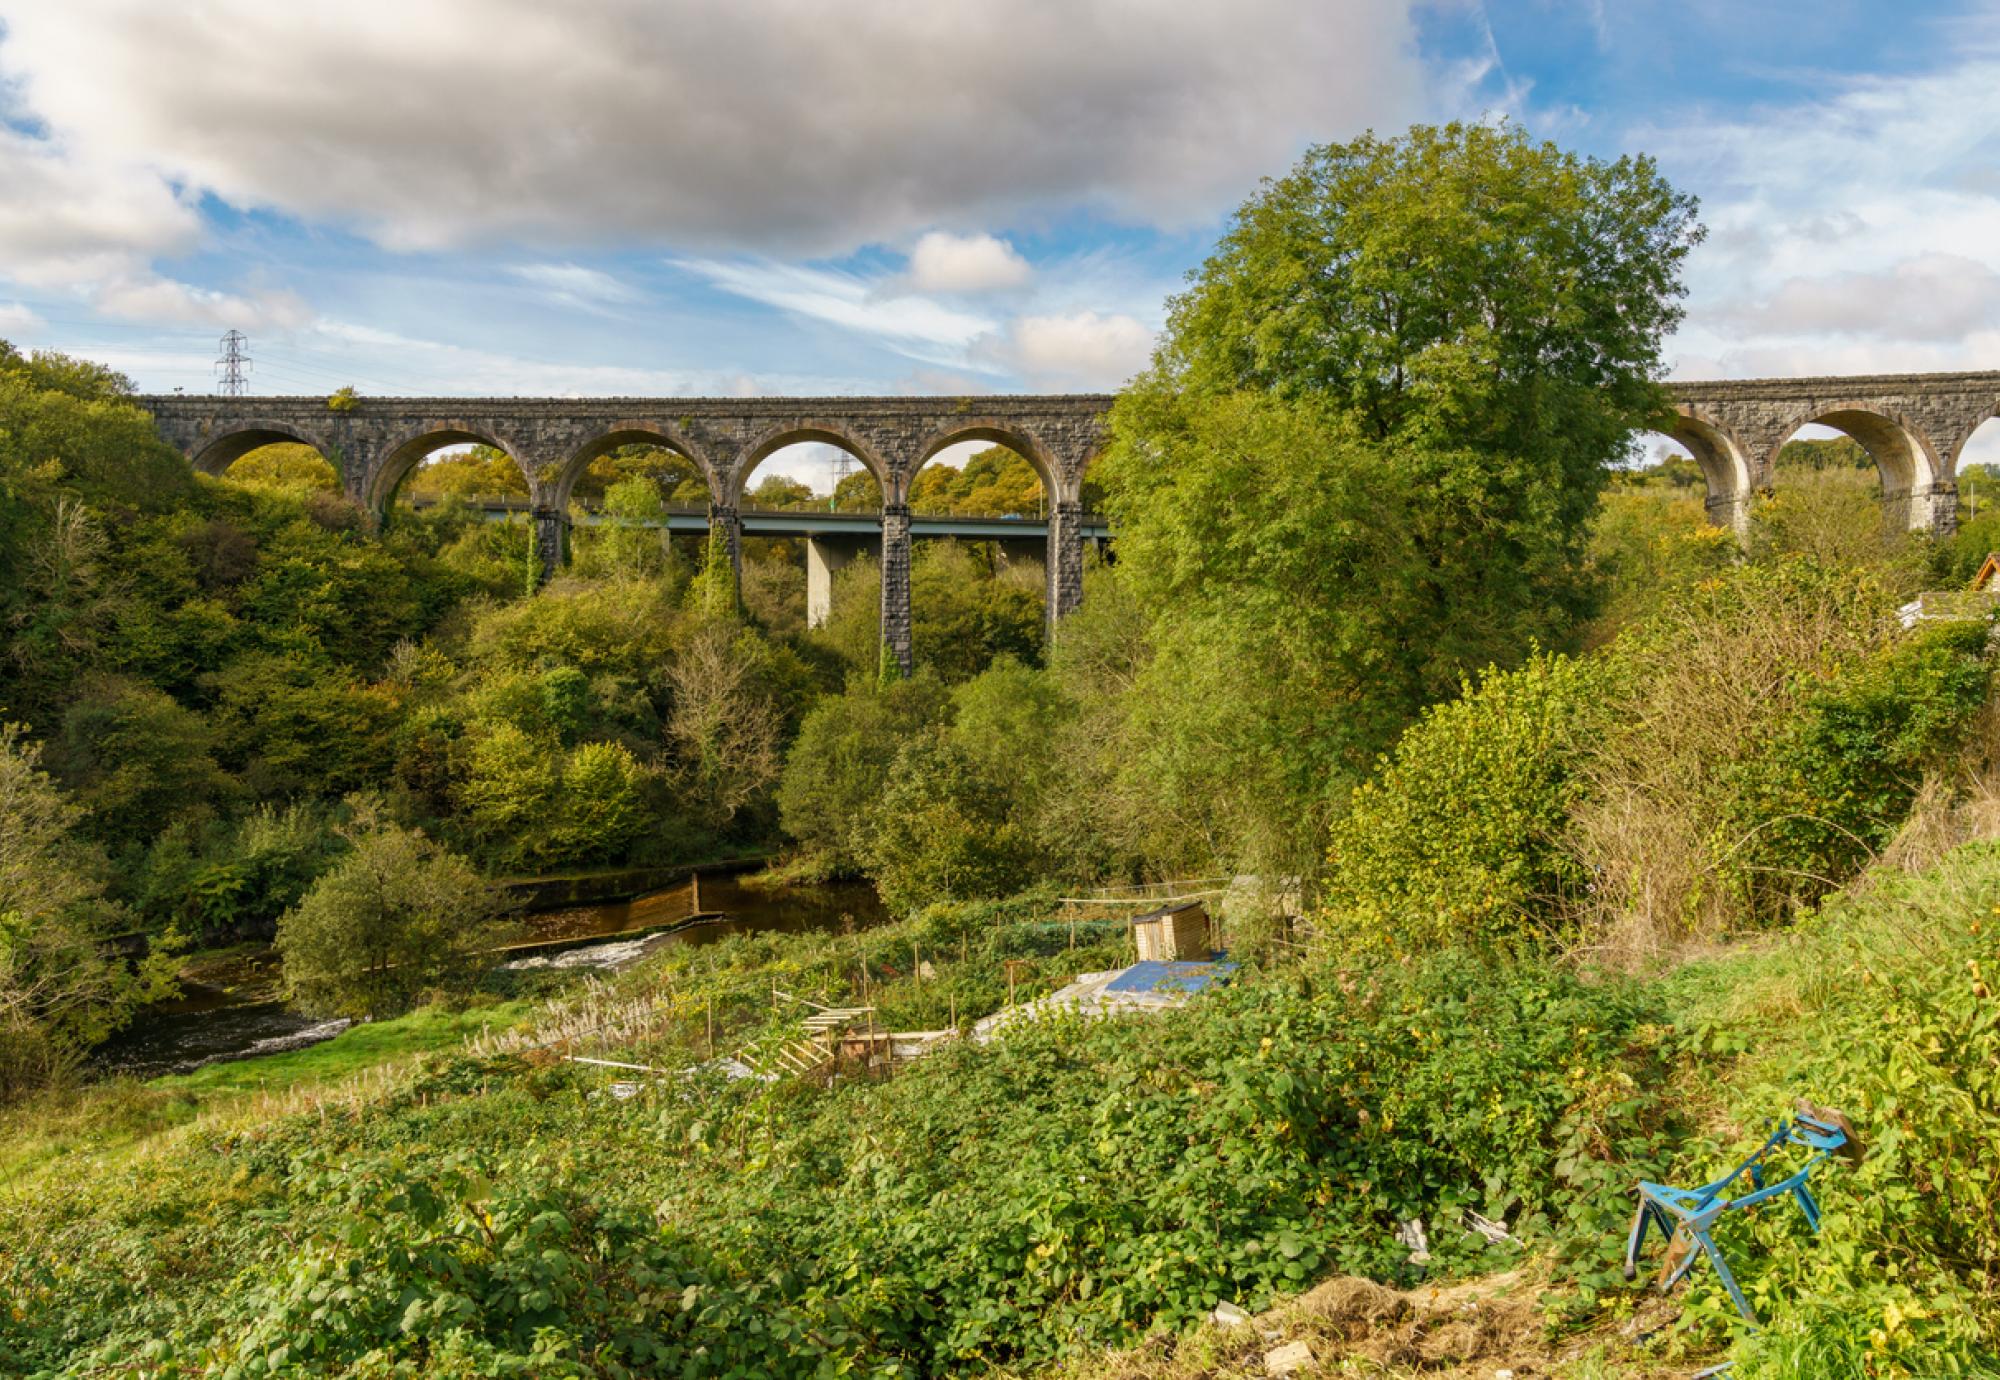 The Cefn-Coed Viaduct in Merthyr Tydfil, Mid Glamorgan, Wales, UK